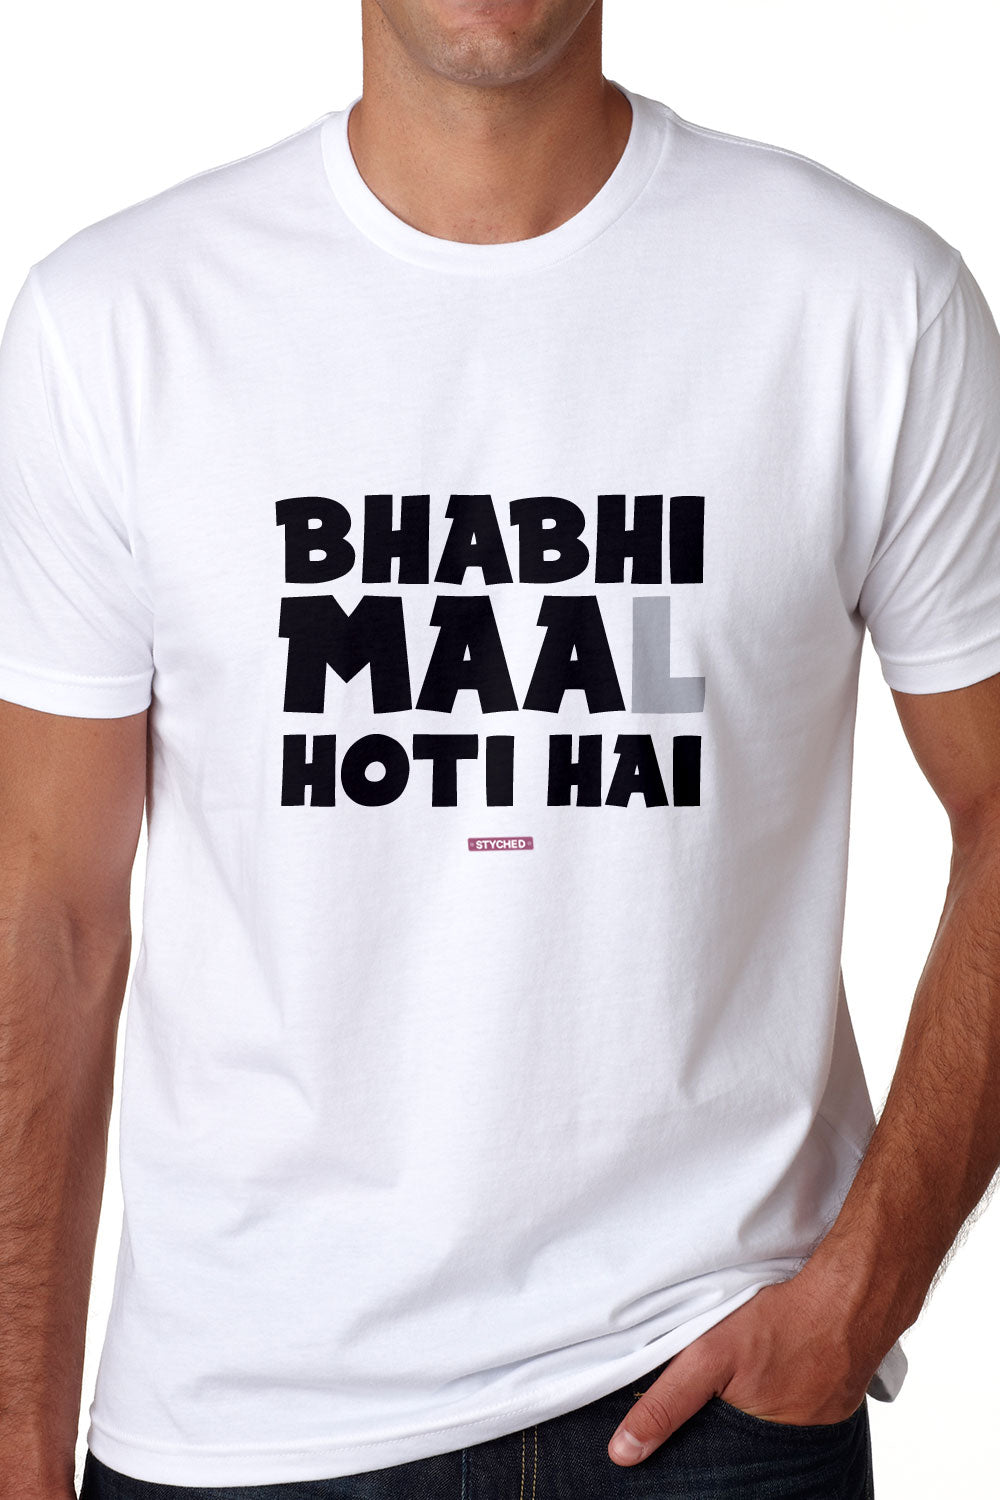 Bhabhi Maa(L) Hoti hai - Quirky Graphic T-Shirt White Color